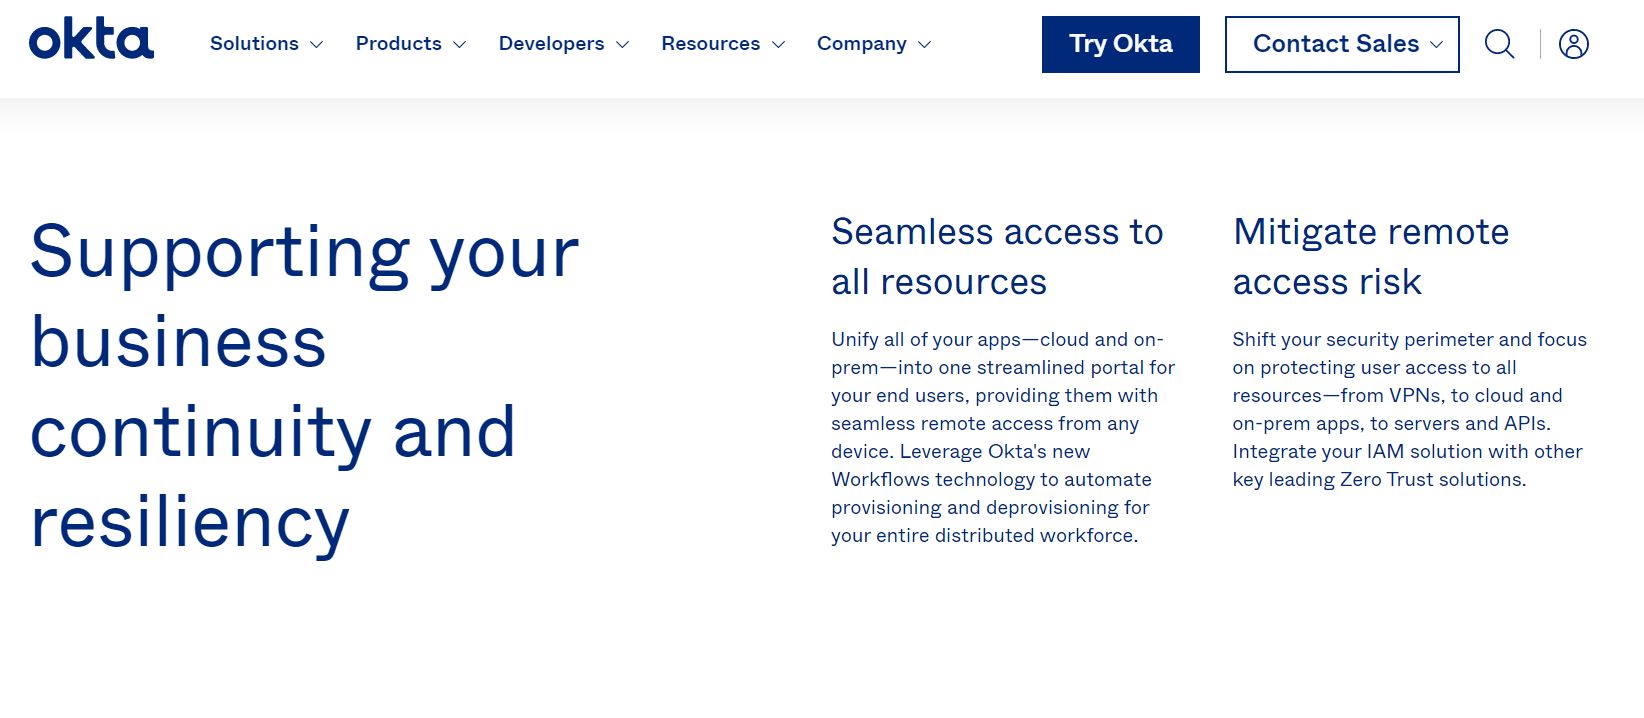 okta product / service